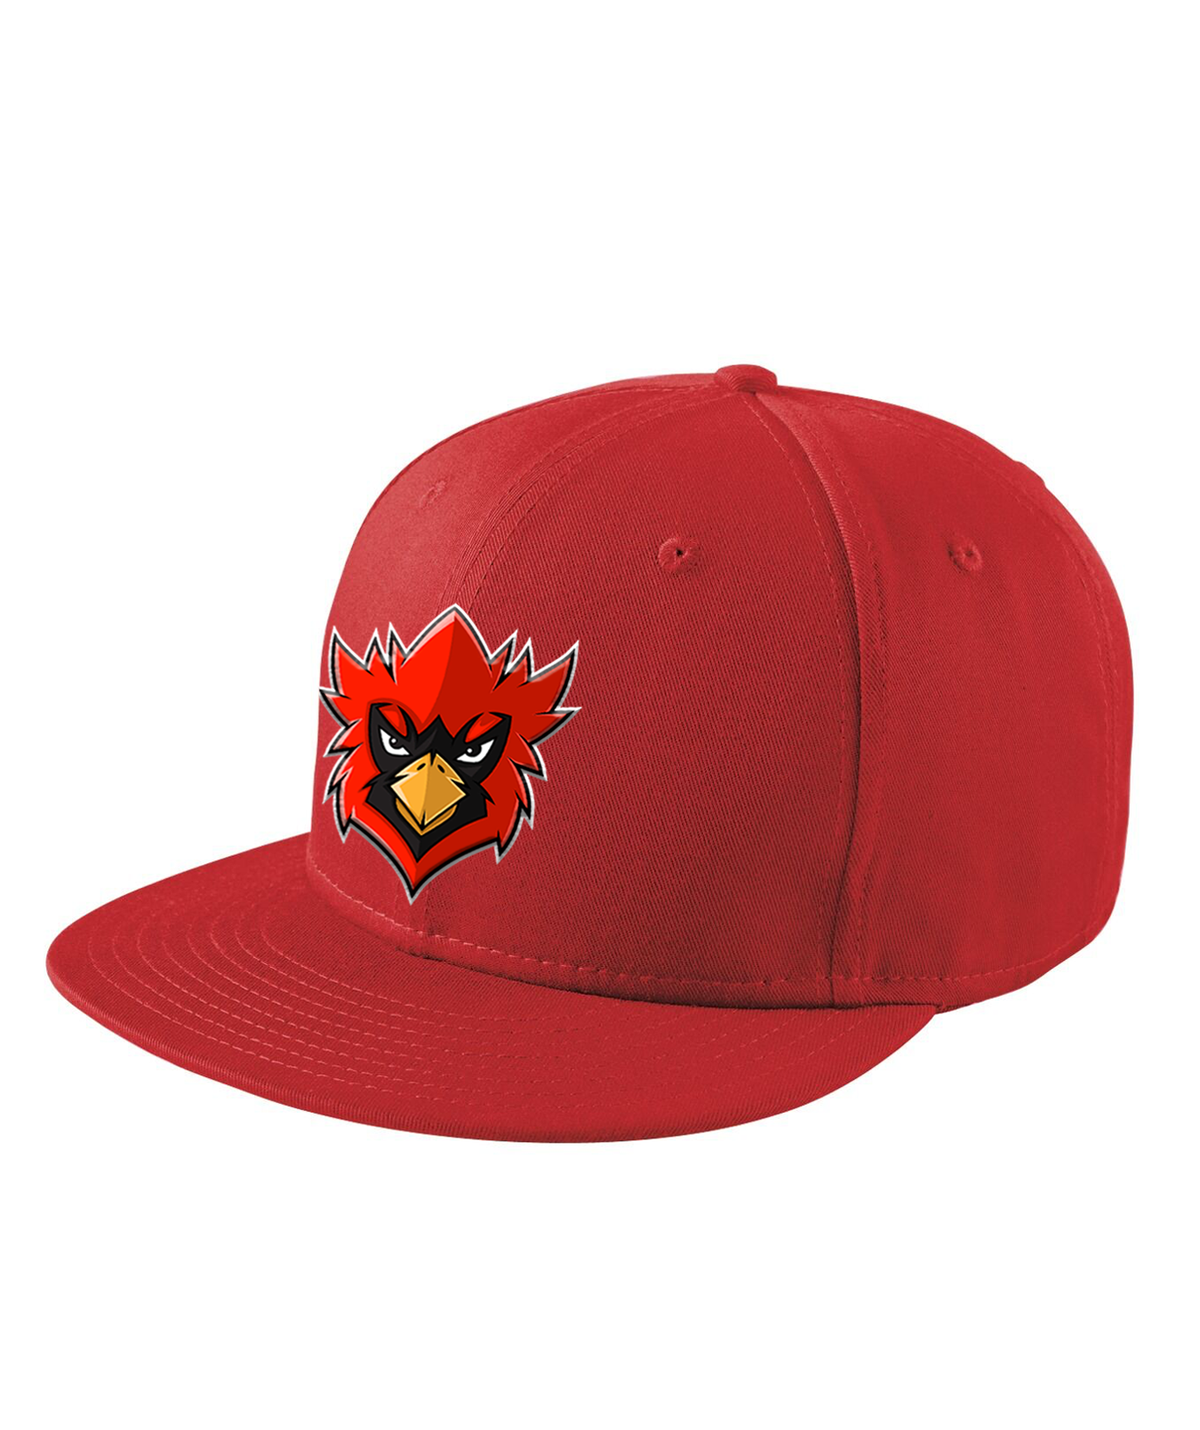 Innisfil Cardinals New Era 9FIFTY Snapback Cap - Red